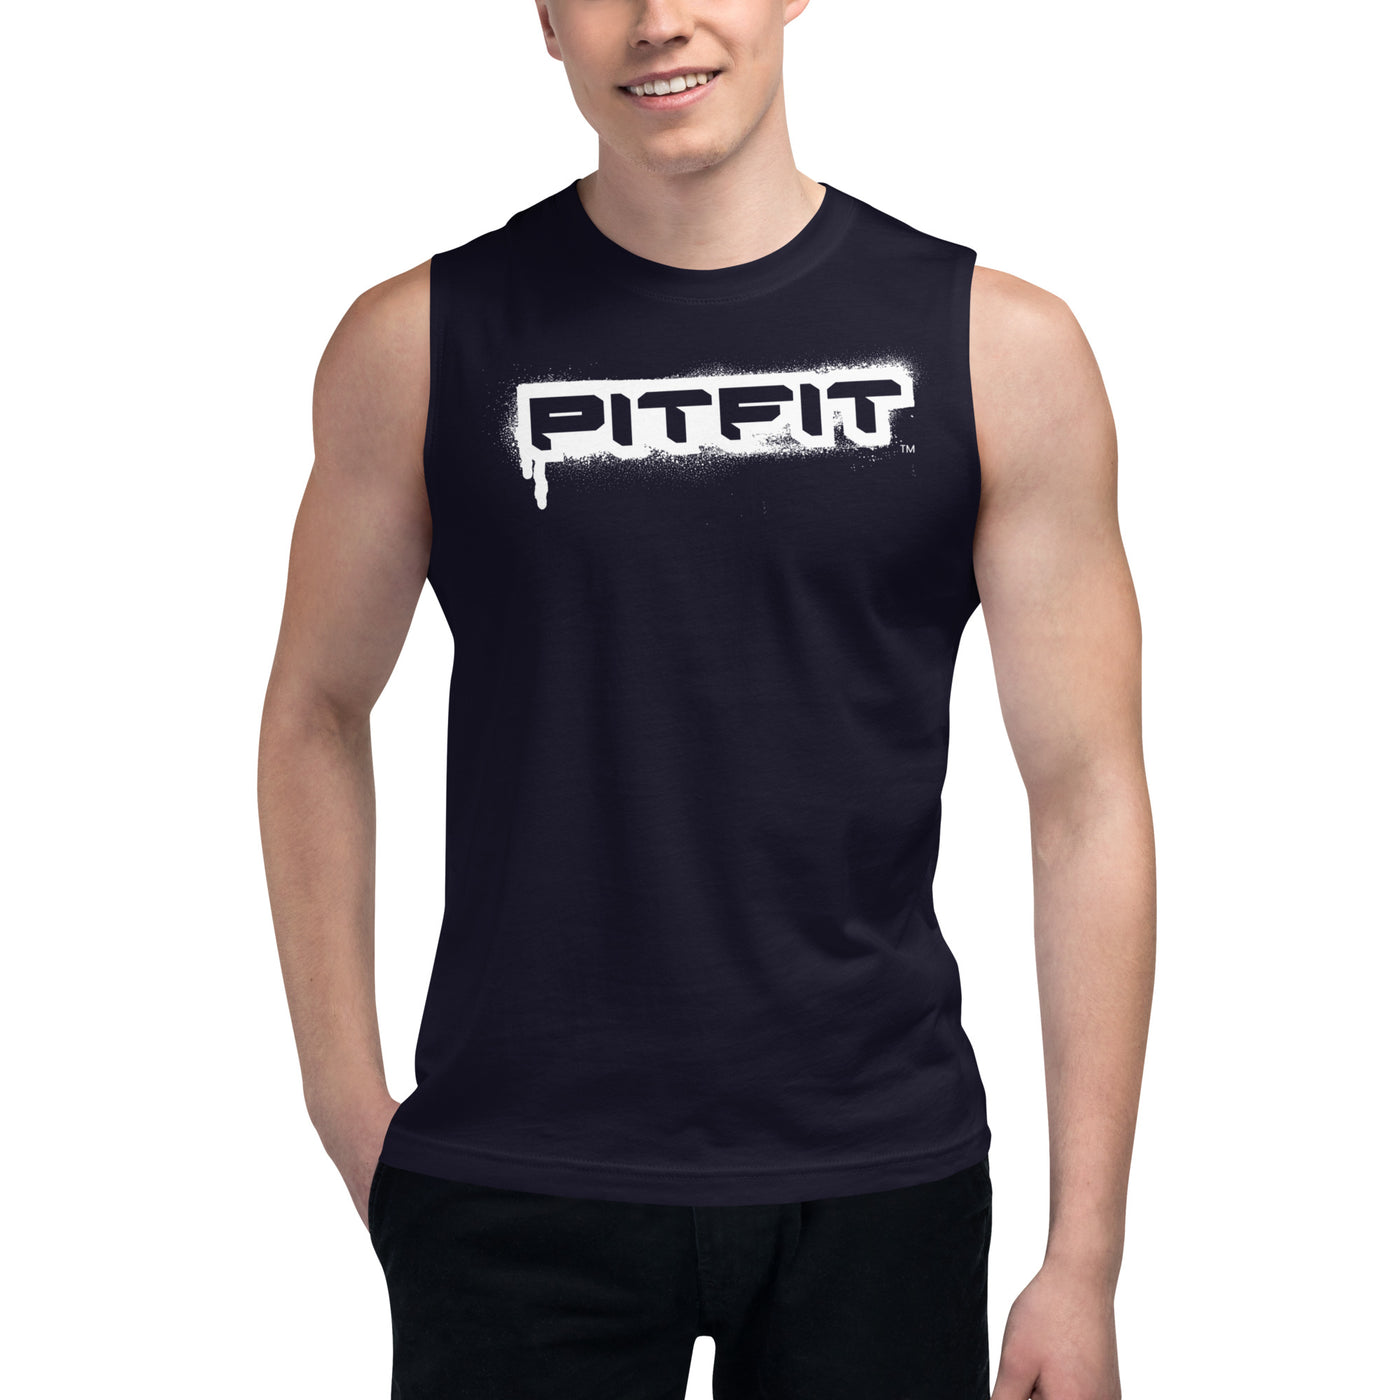 PITFIT Black Muscle Shirt